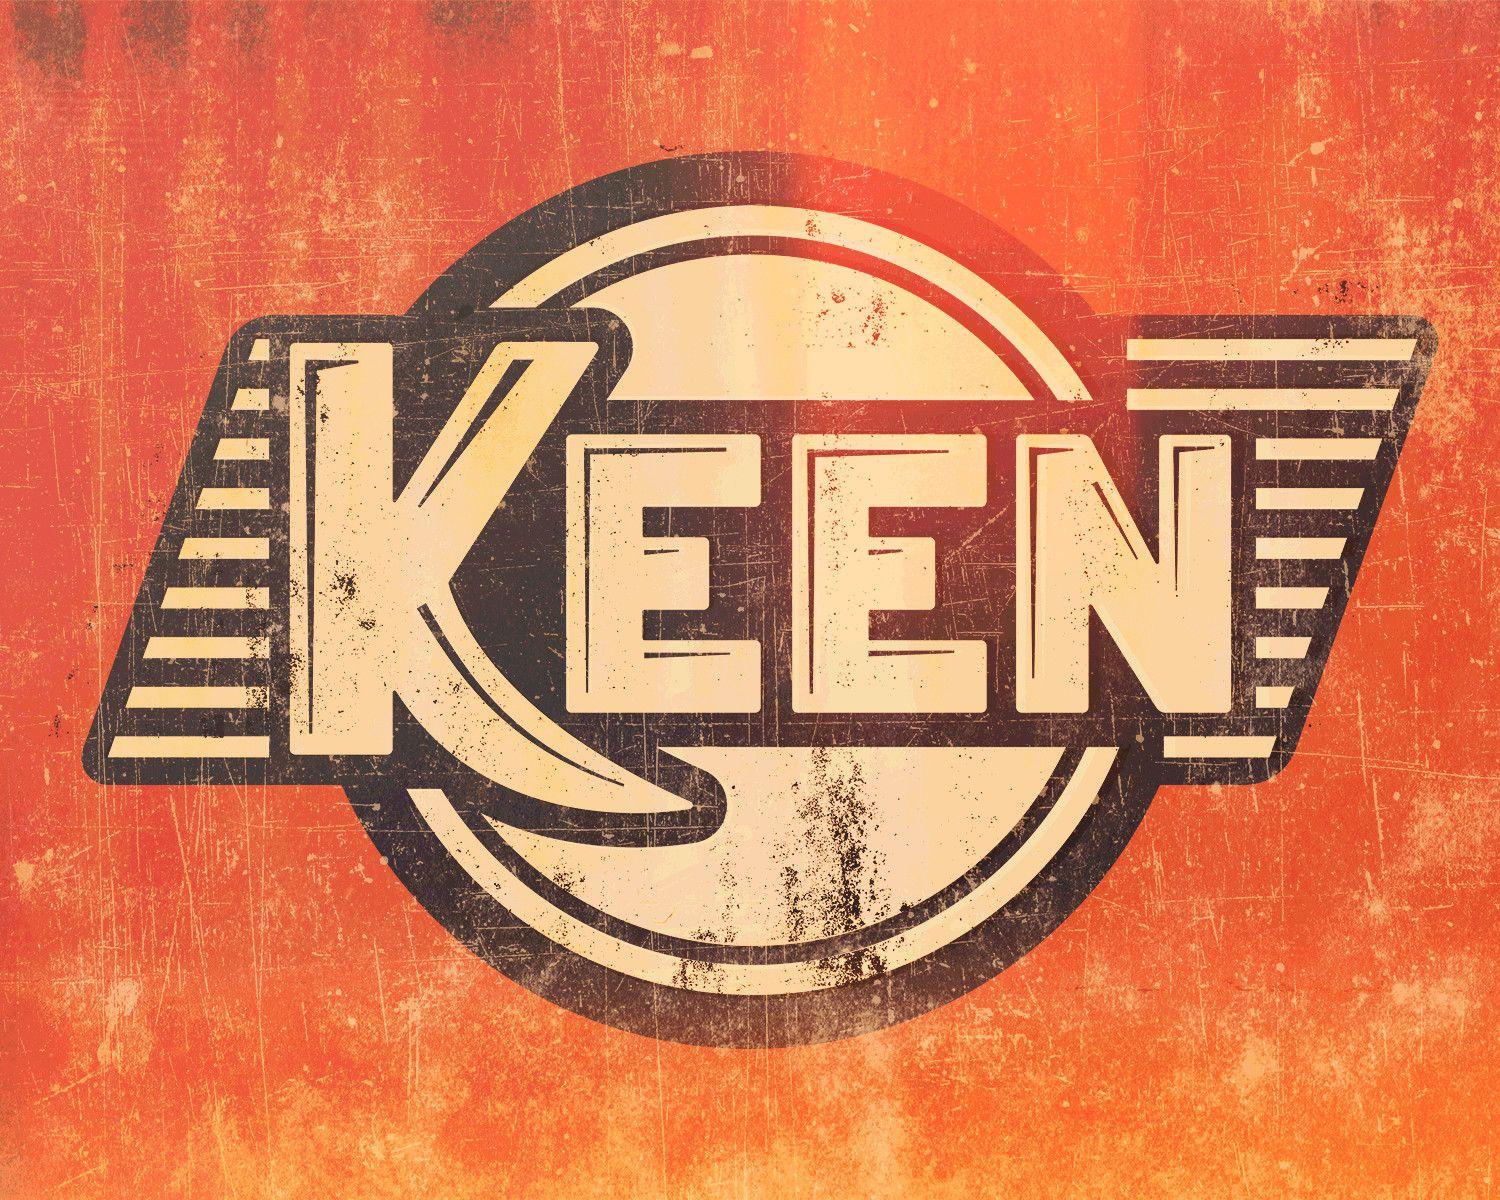 Keen Logo - Keen Transportation Works, Chad Behnke